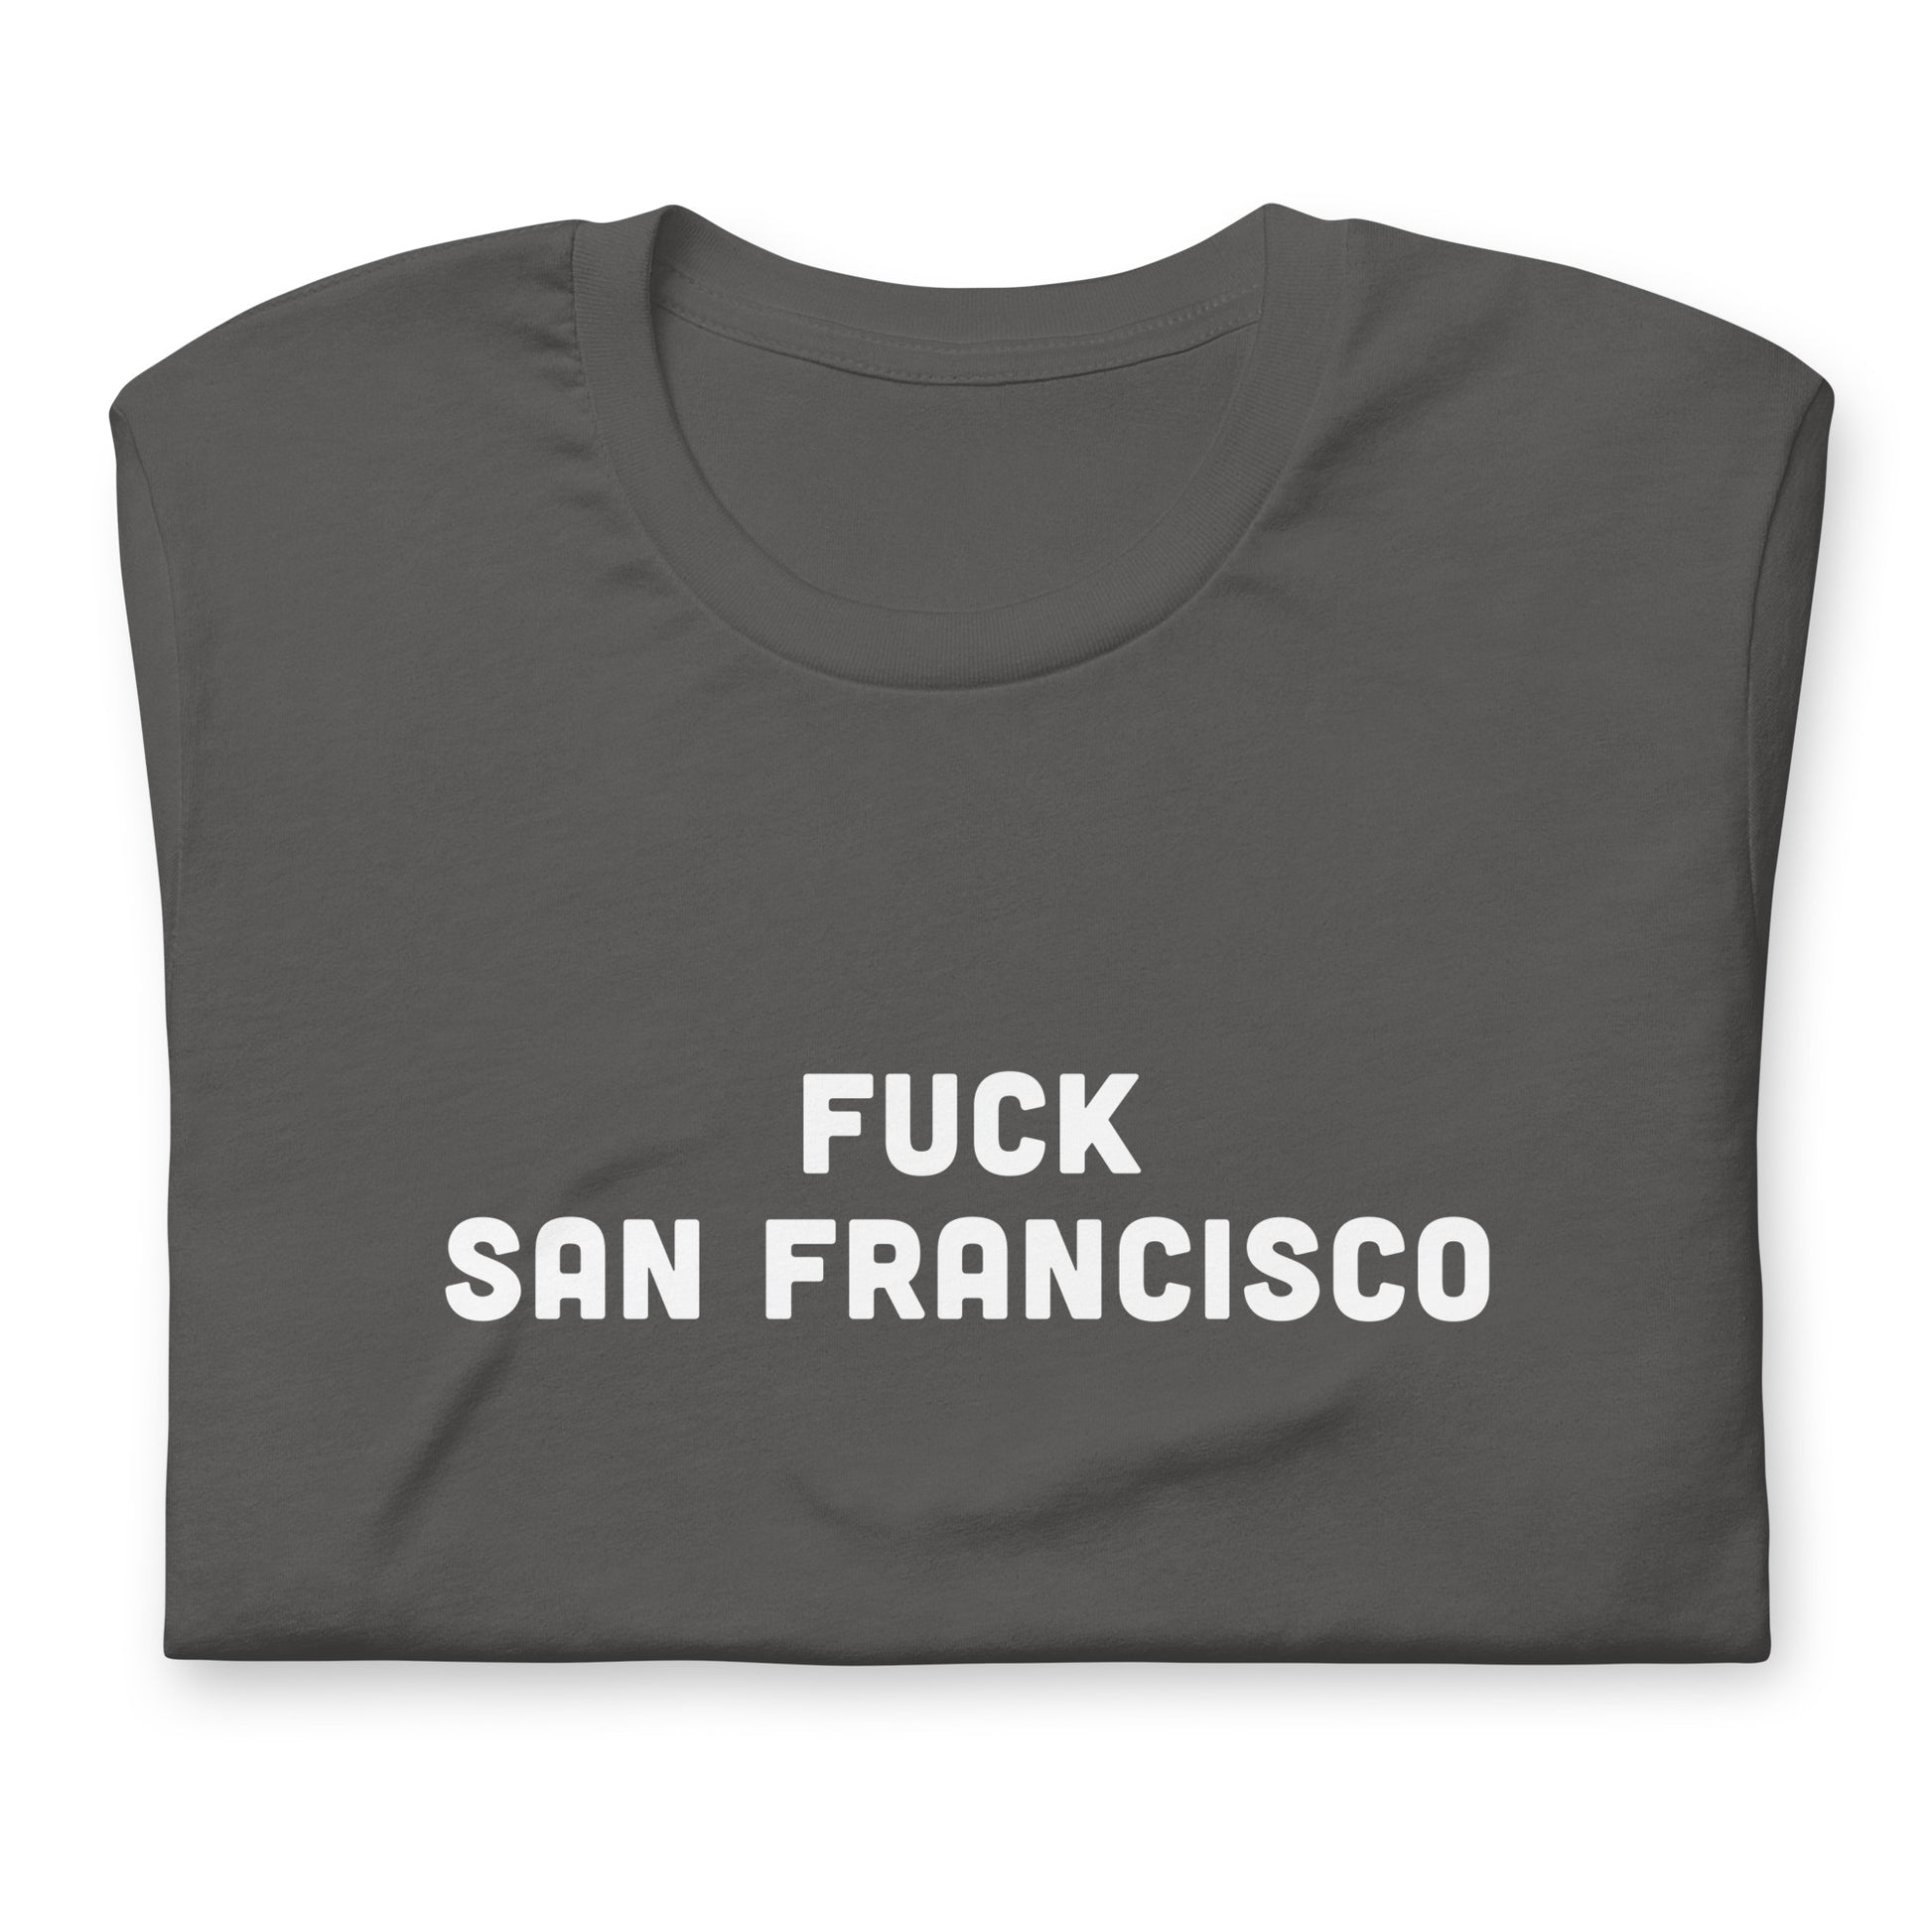 Fuck San Francisco T-Shirt Size 2XL Color Black